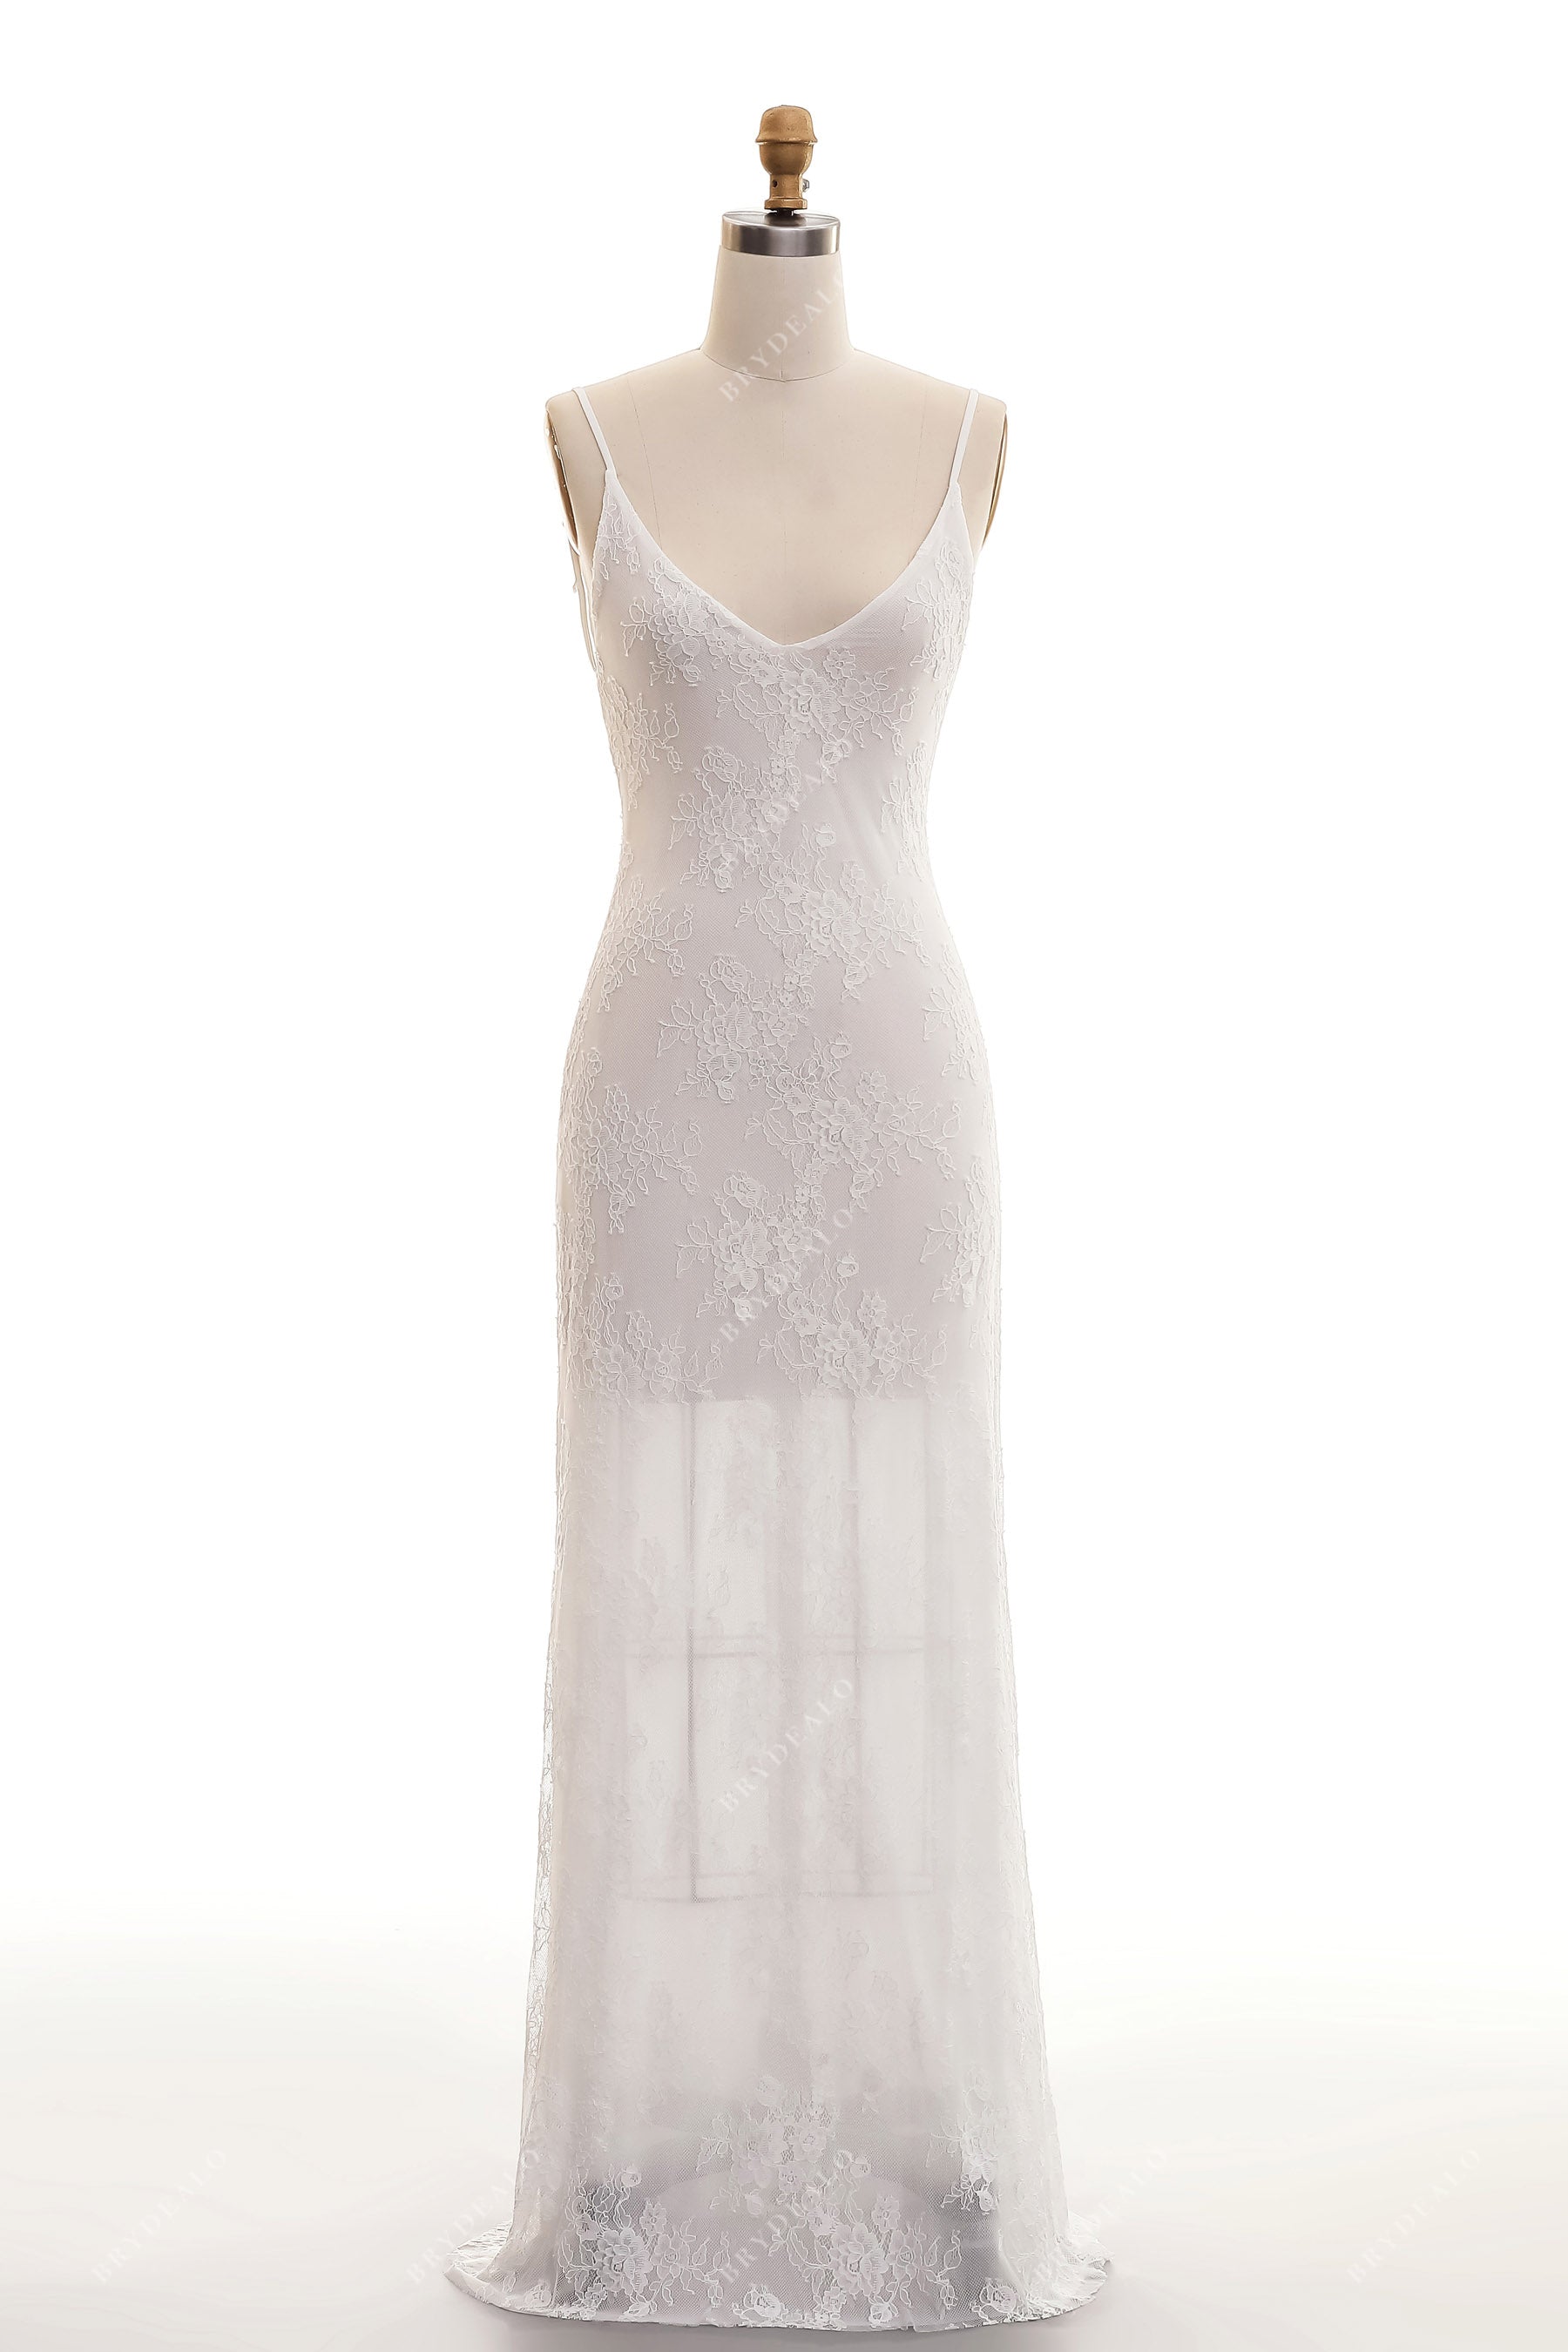 simple elastic lace bridal slip gown